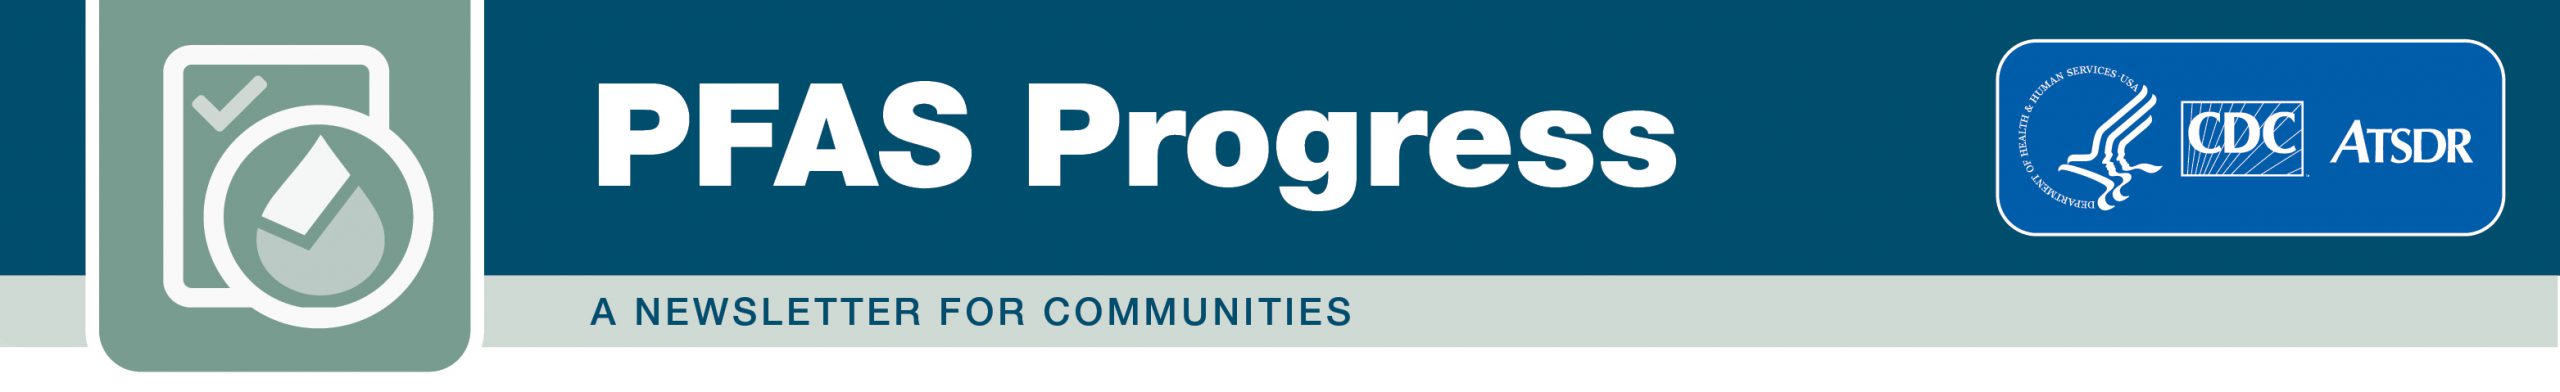 PFAS progress Newsletter